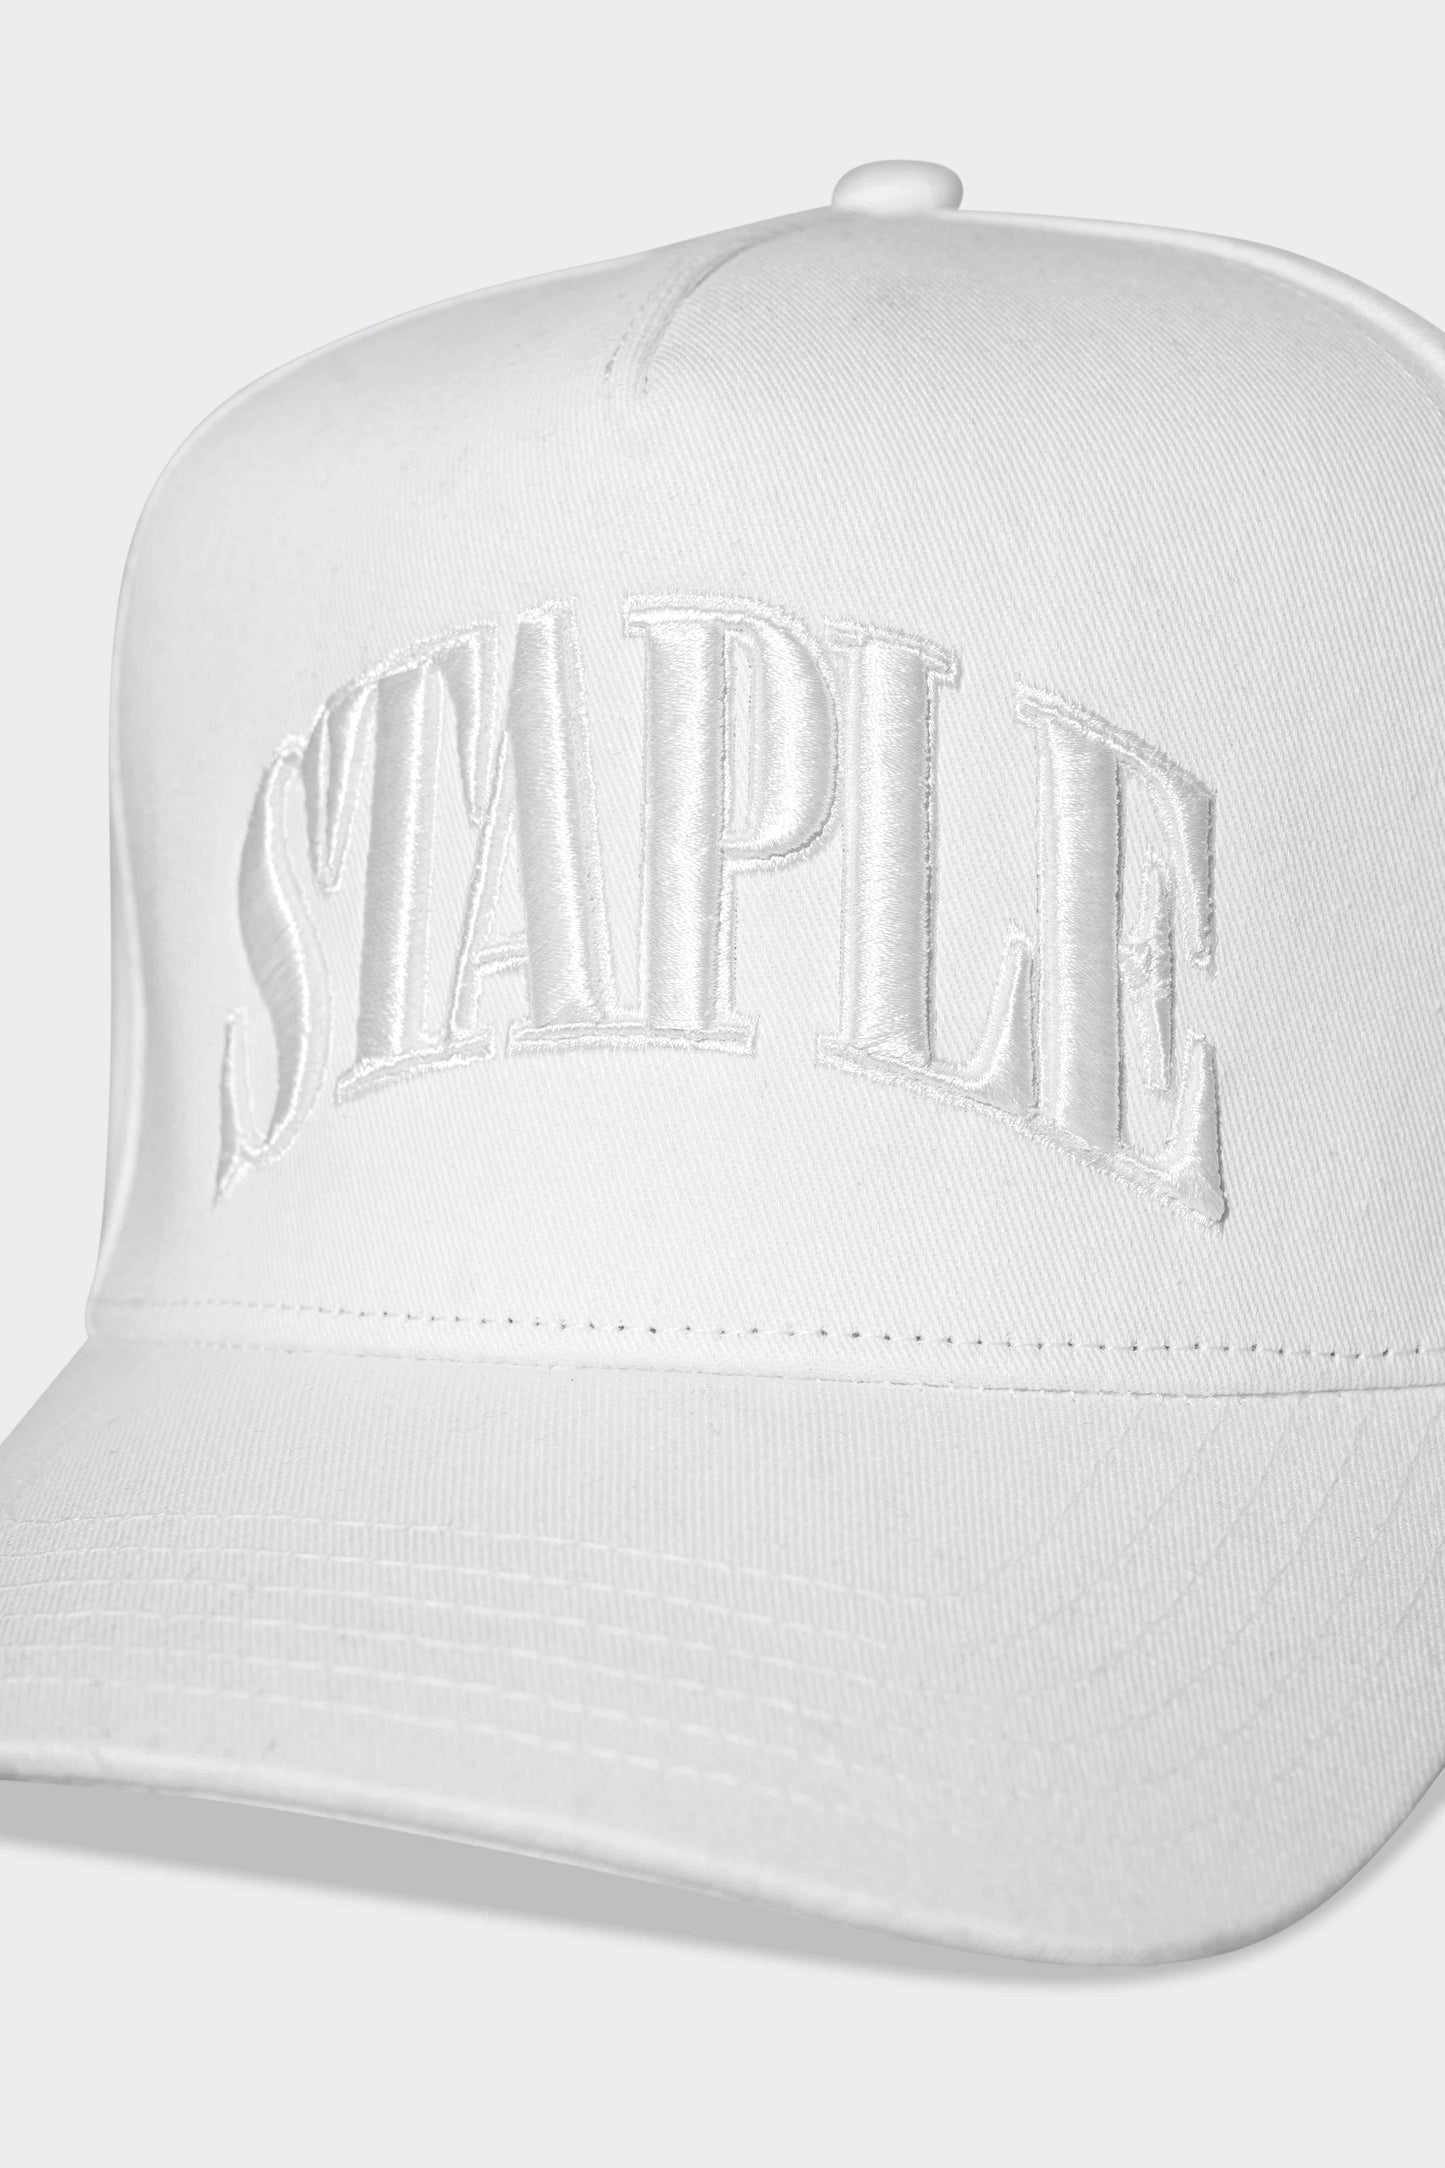 Staple 3D Arched Snapback White/White/White